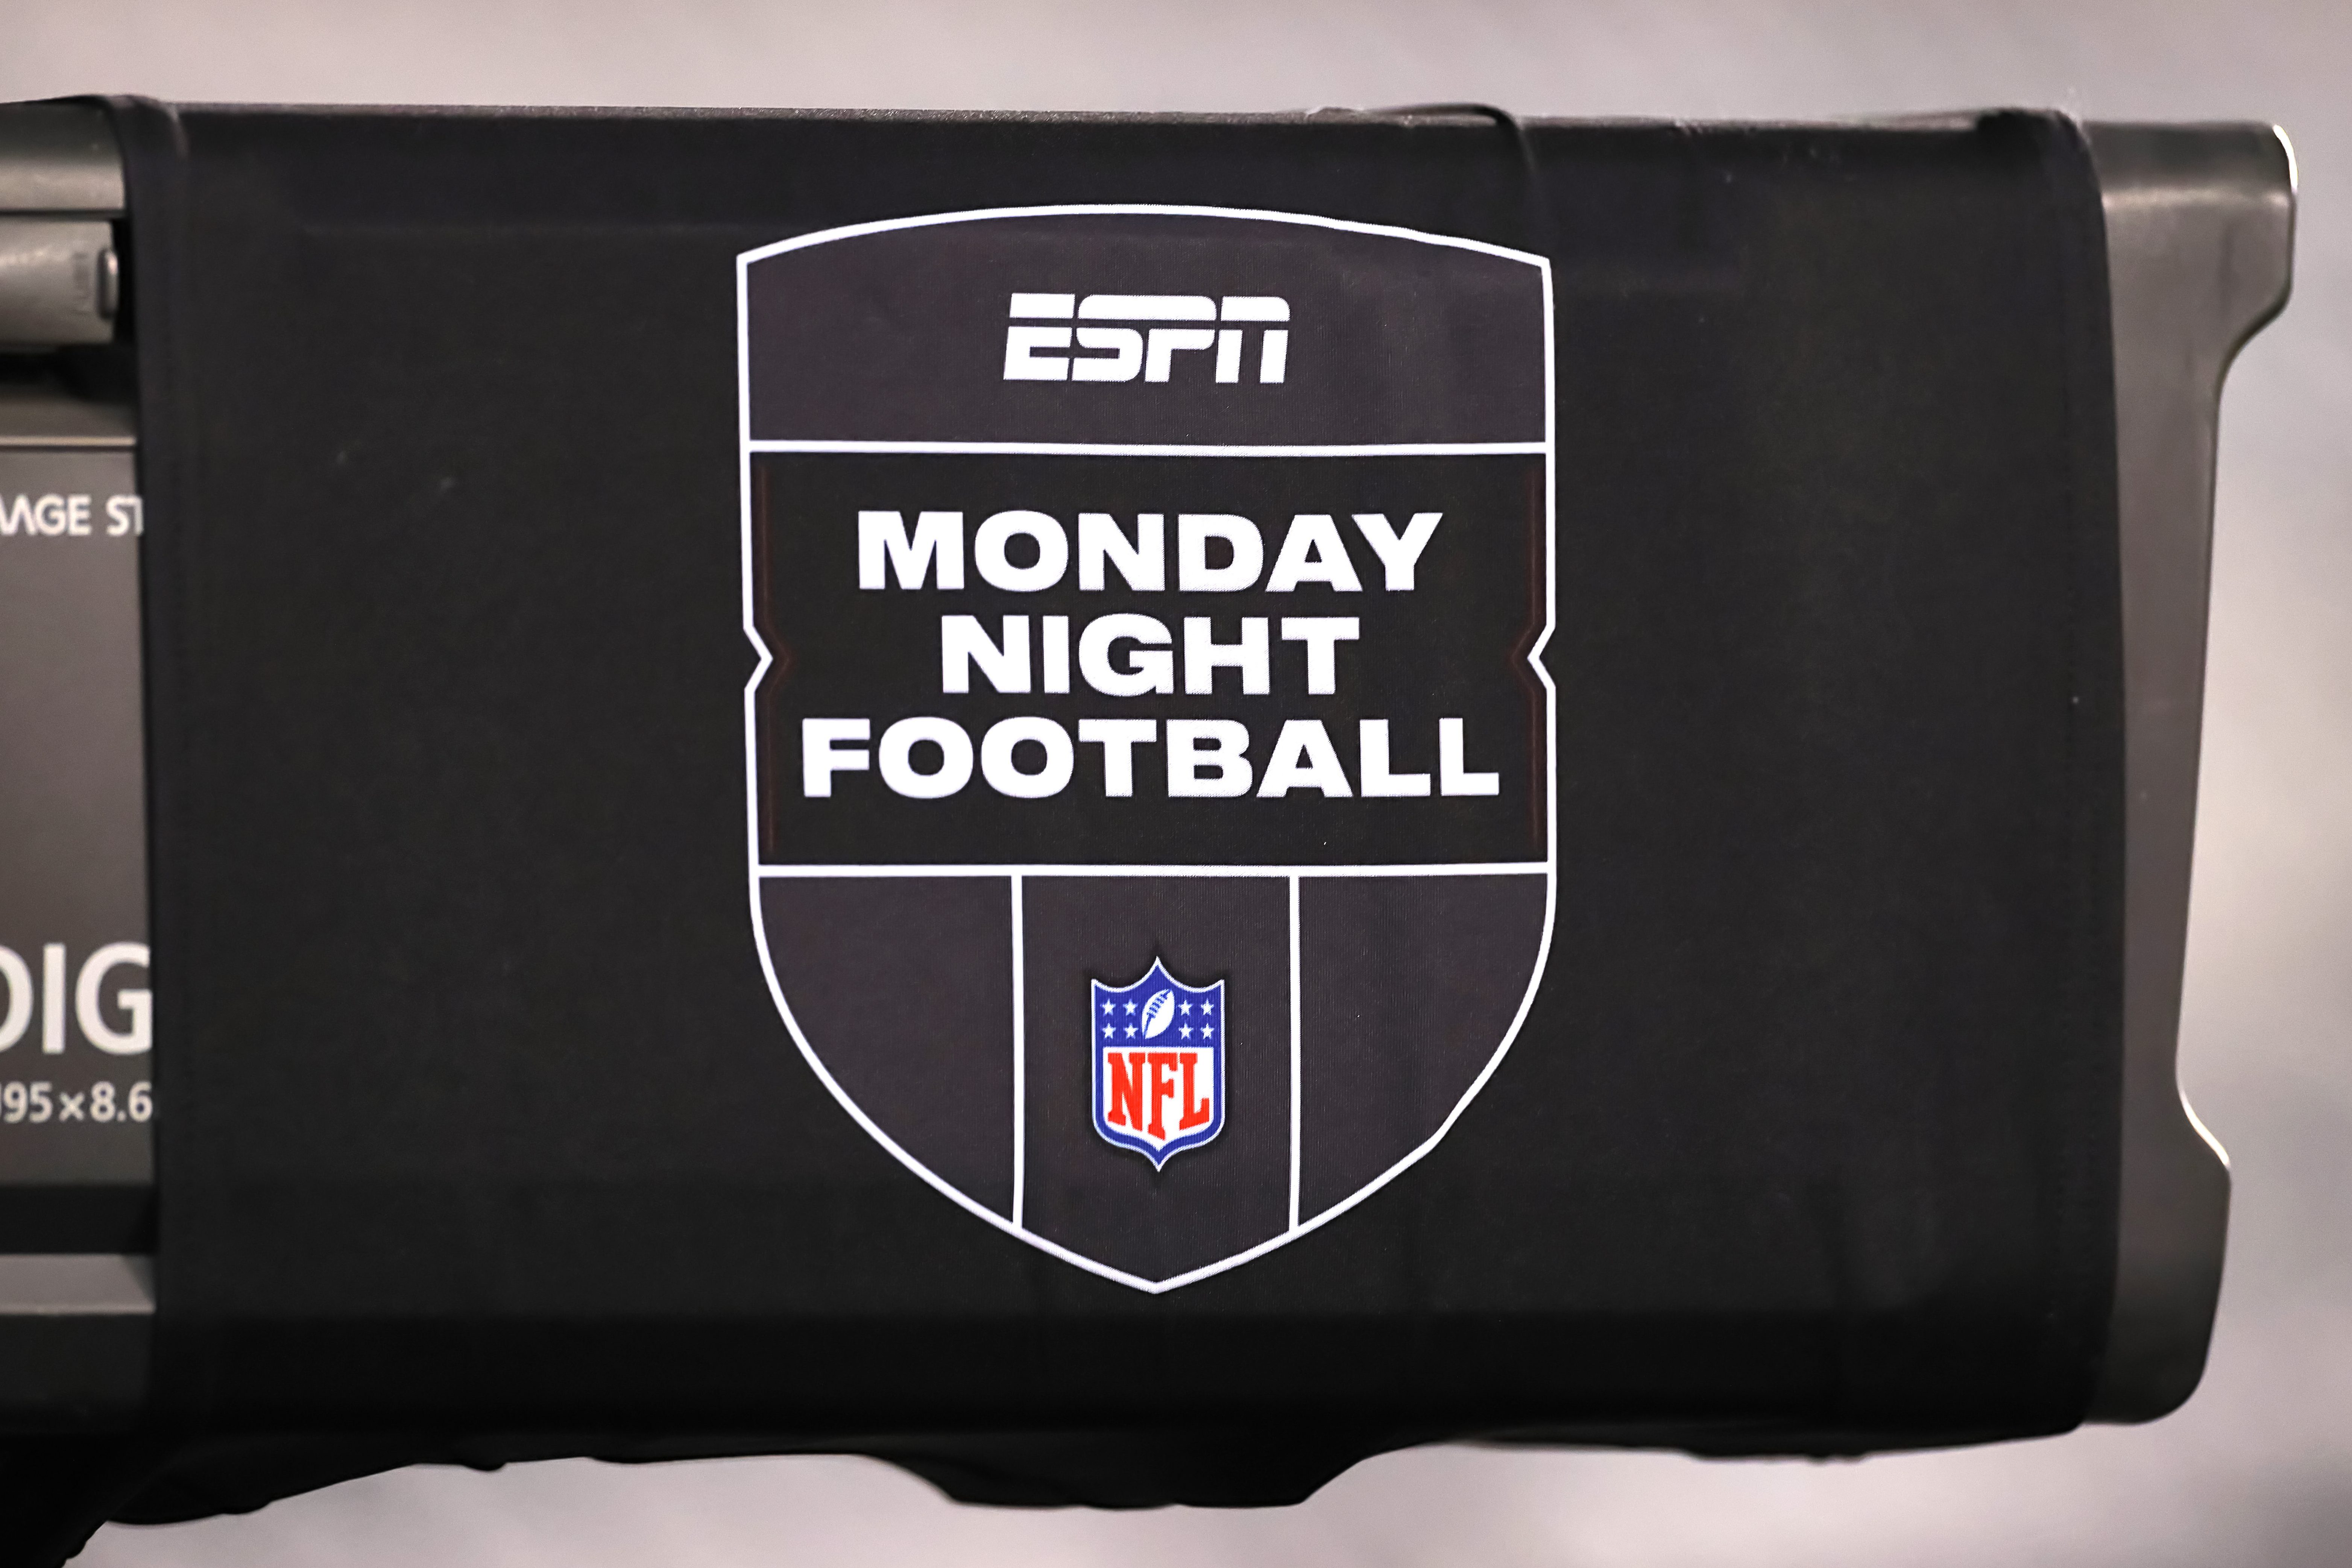 ESPN's "Monday Night Football" logo